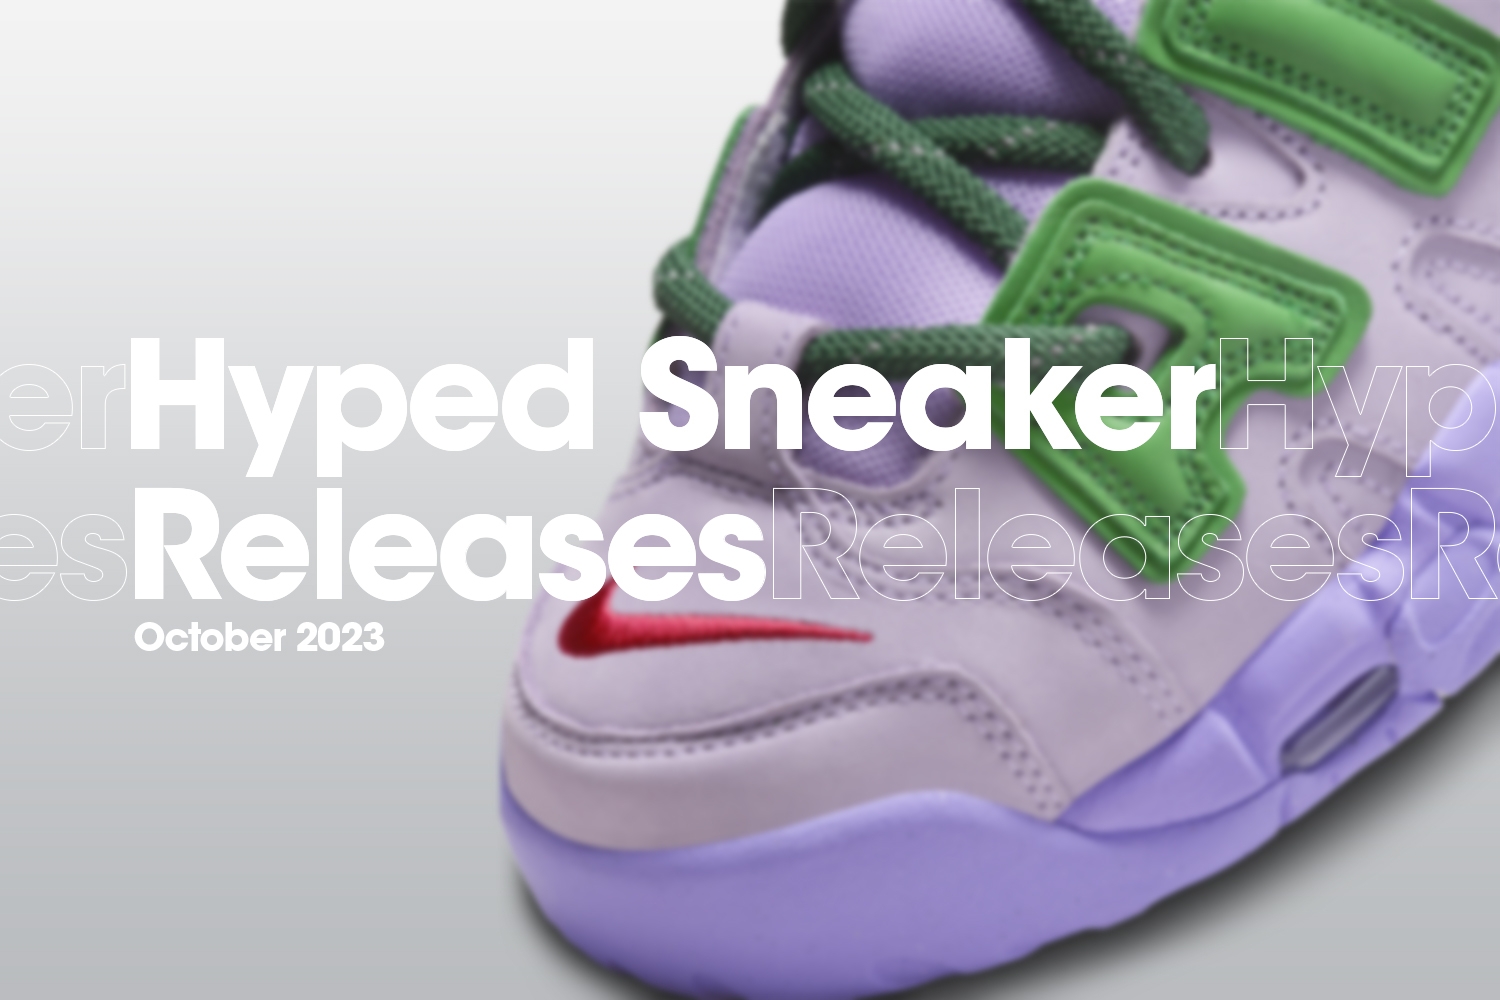 Hyped Sneaker Releases van oktober 2023